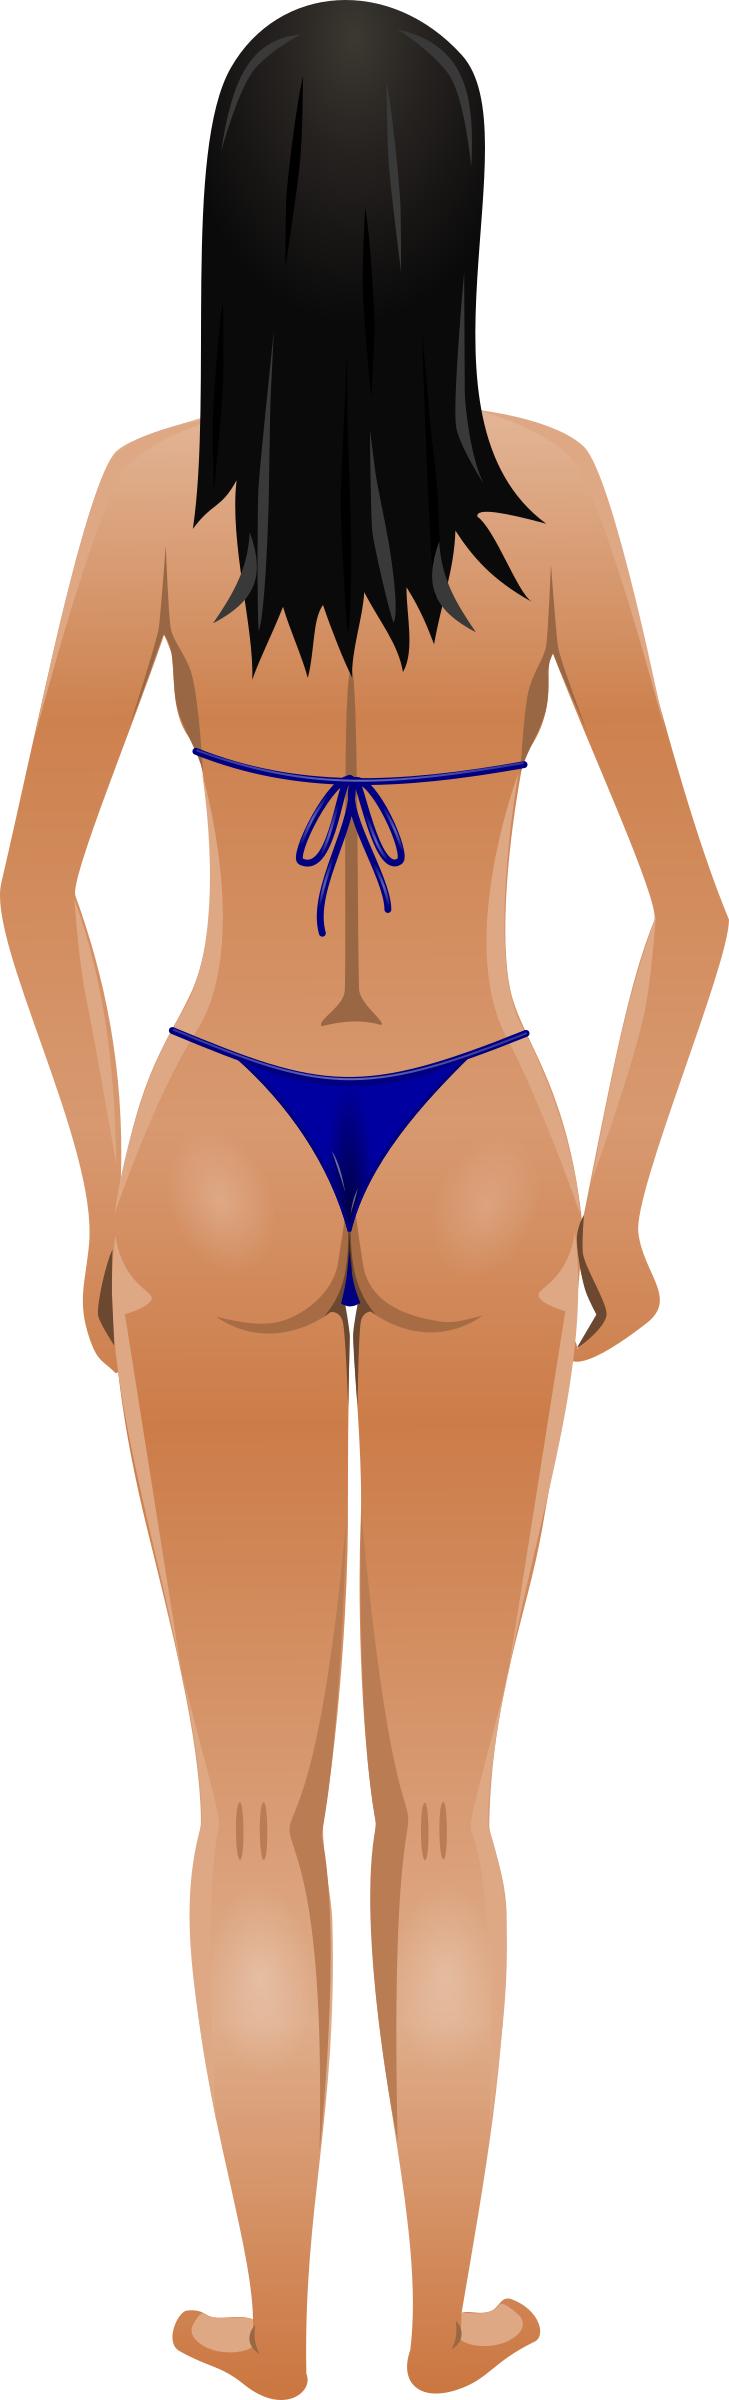 Young lady (light skin, blue bikini, black hair) png